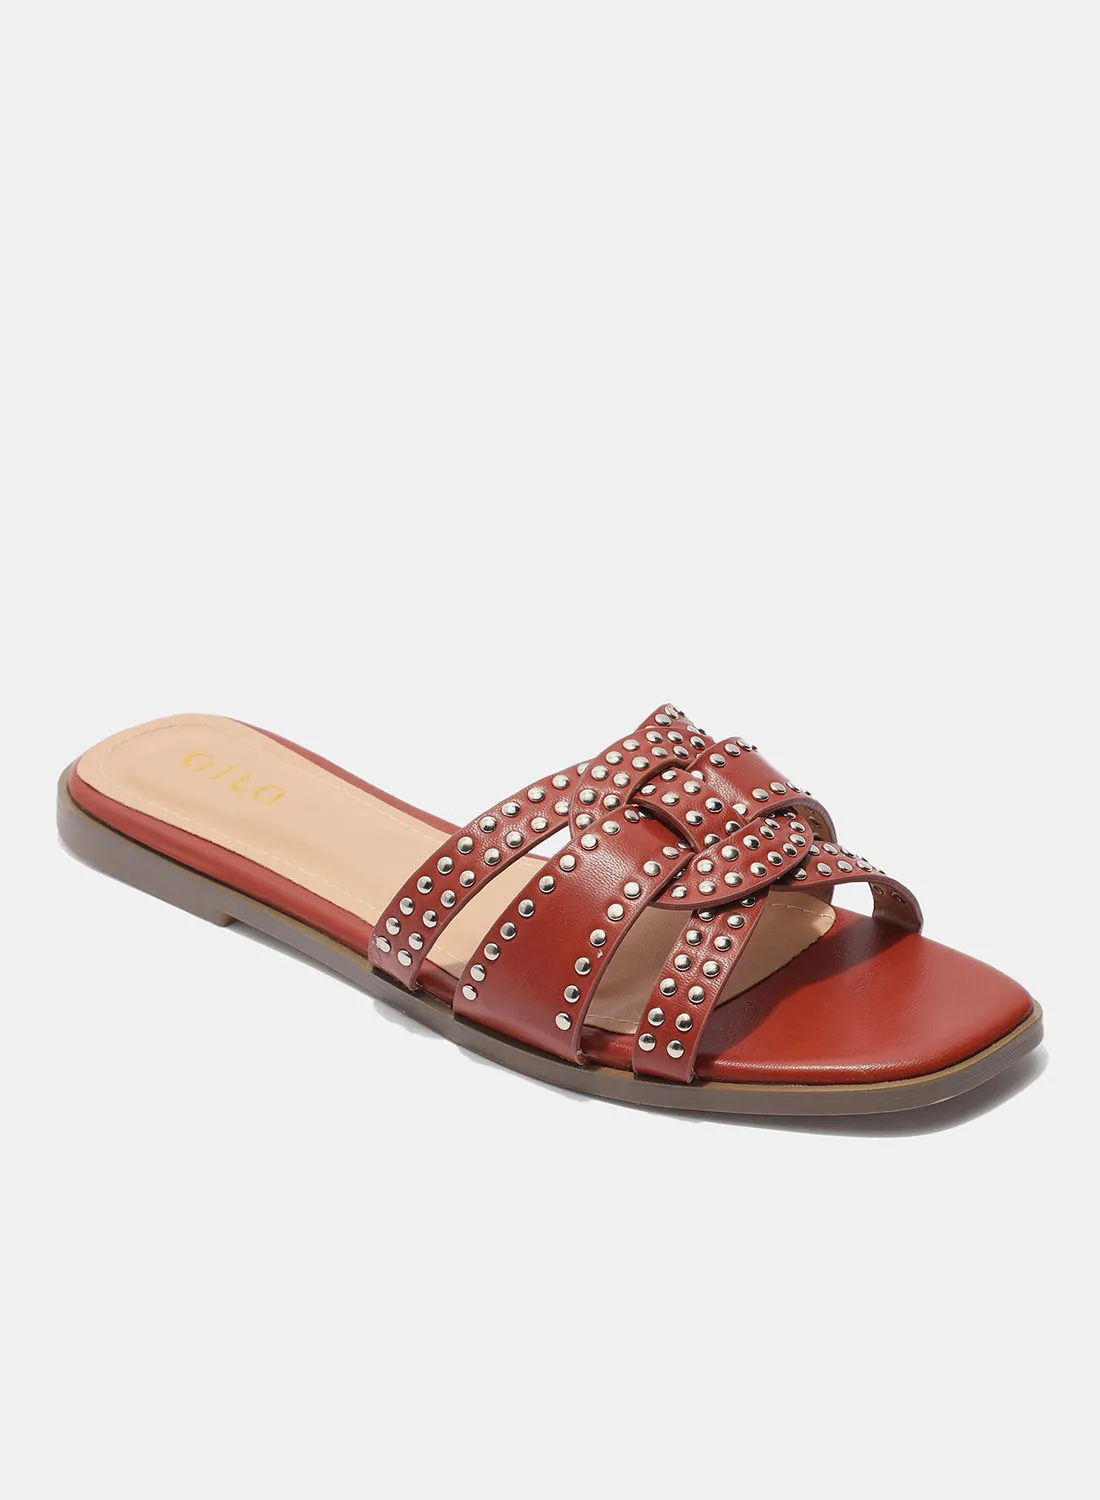 Aila Fashionable Casual Flat Sandals تان / فضي